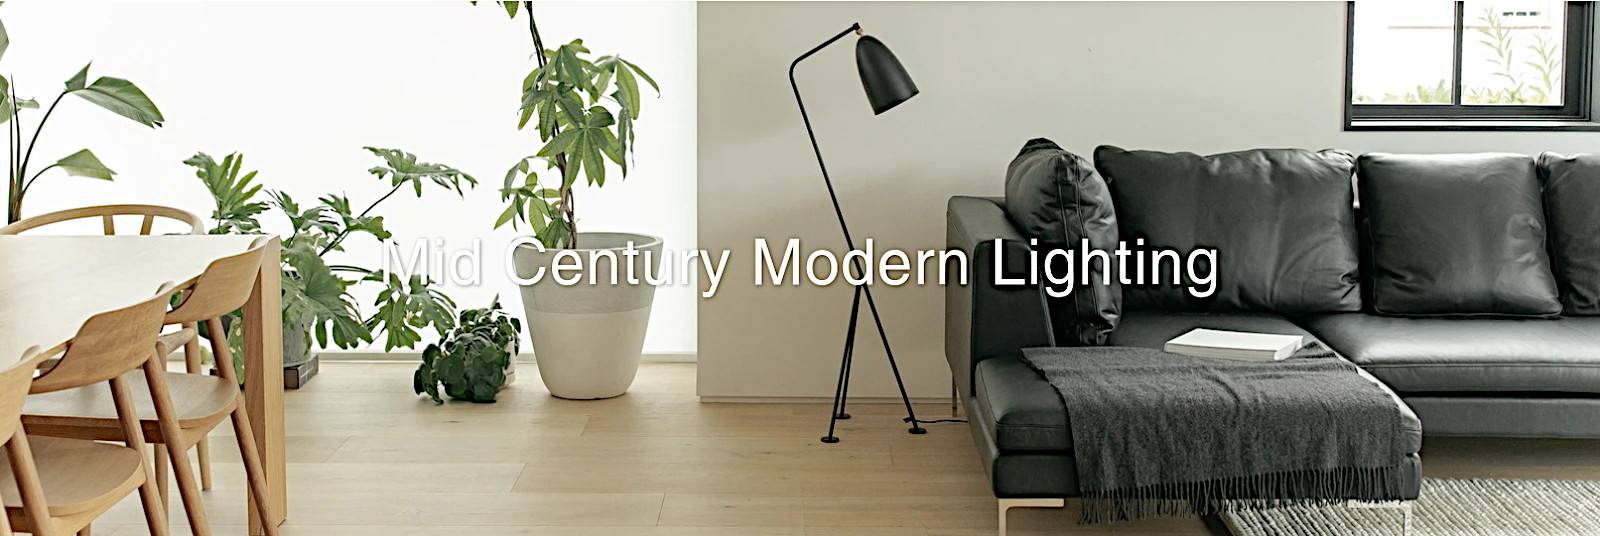 Affordable Price mid century modern lighting